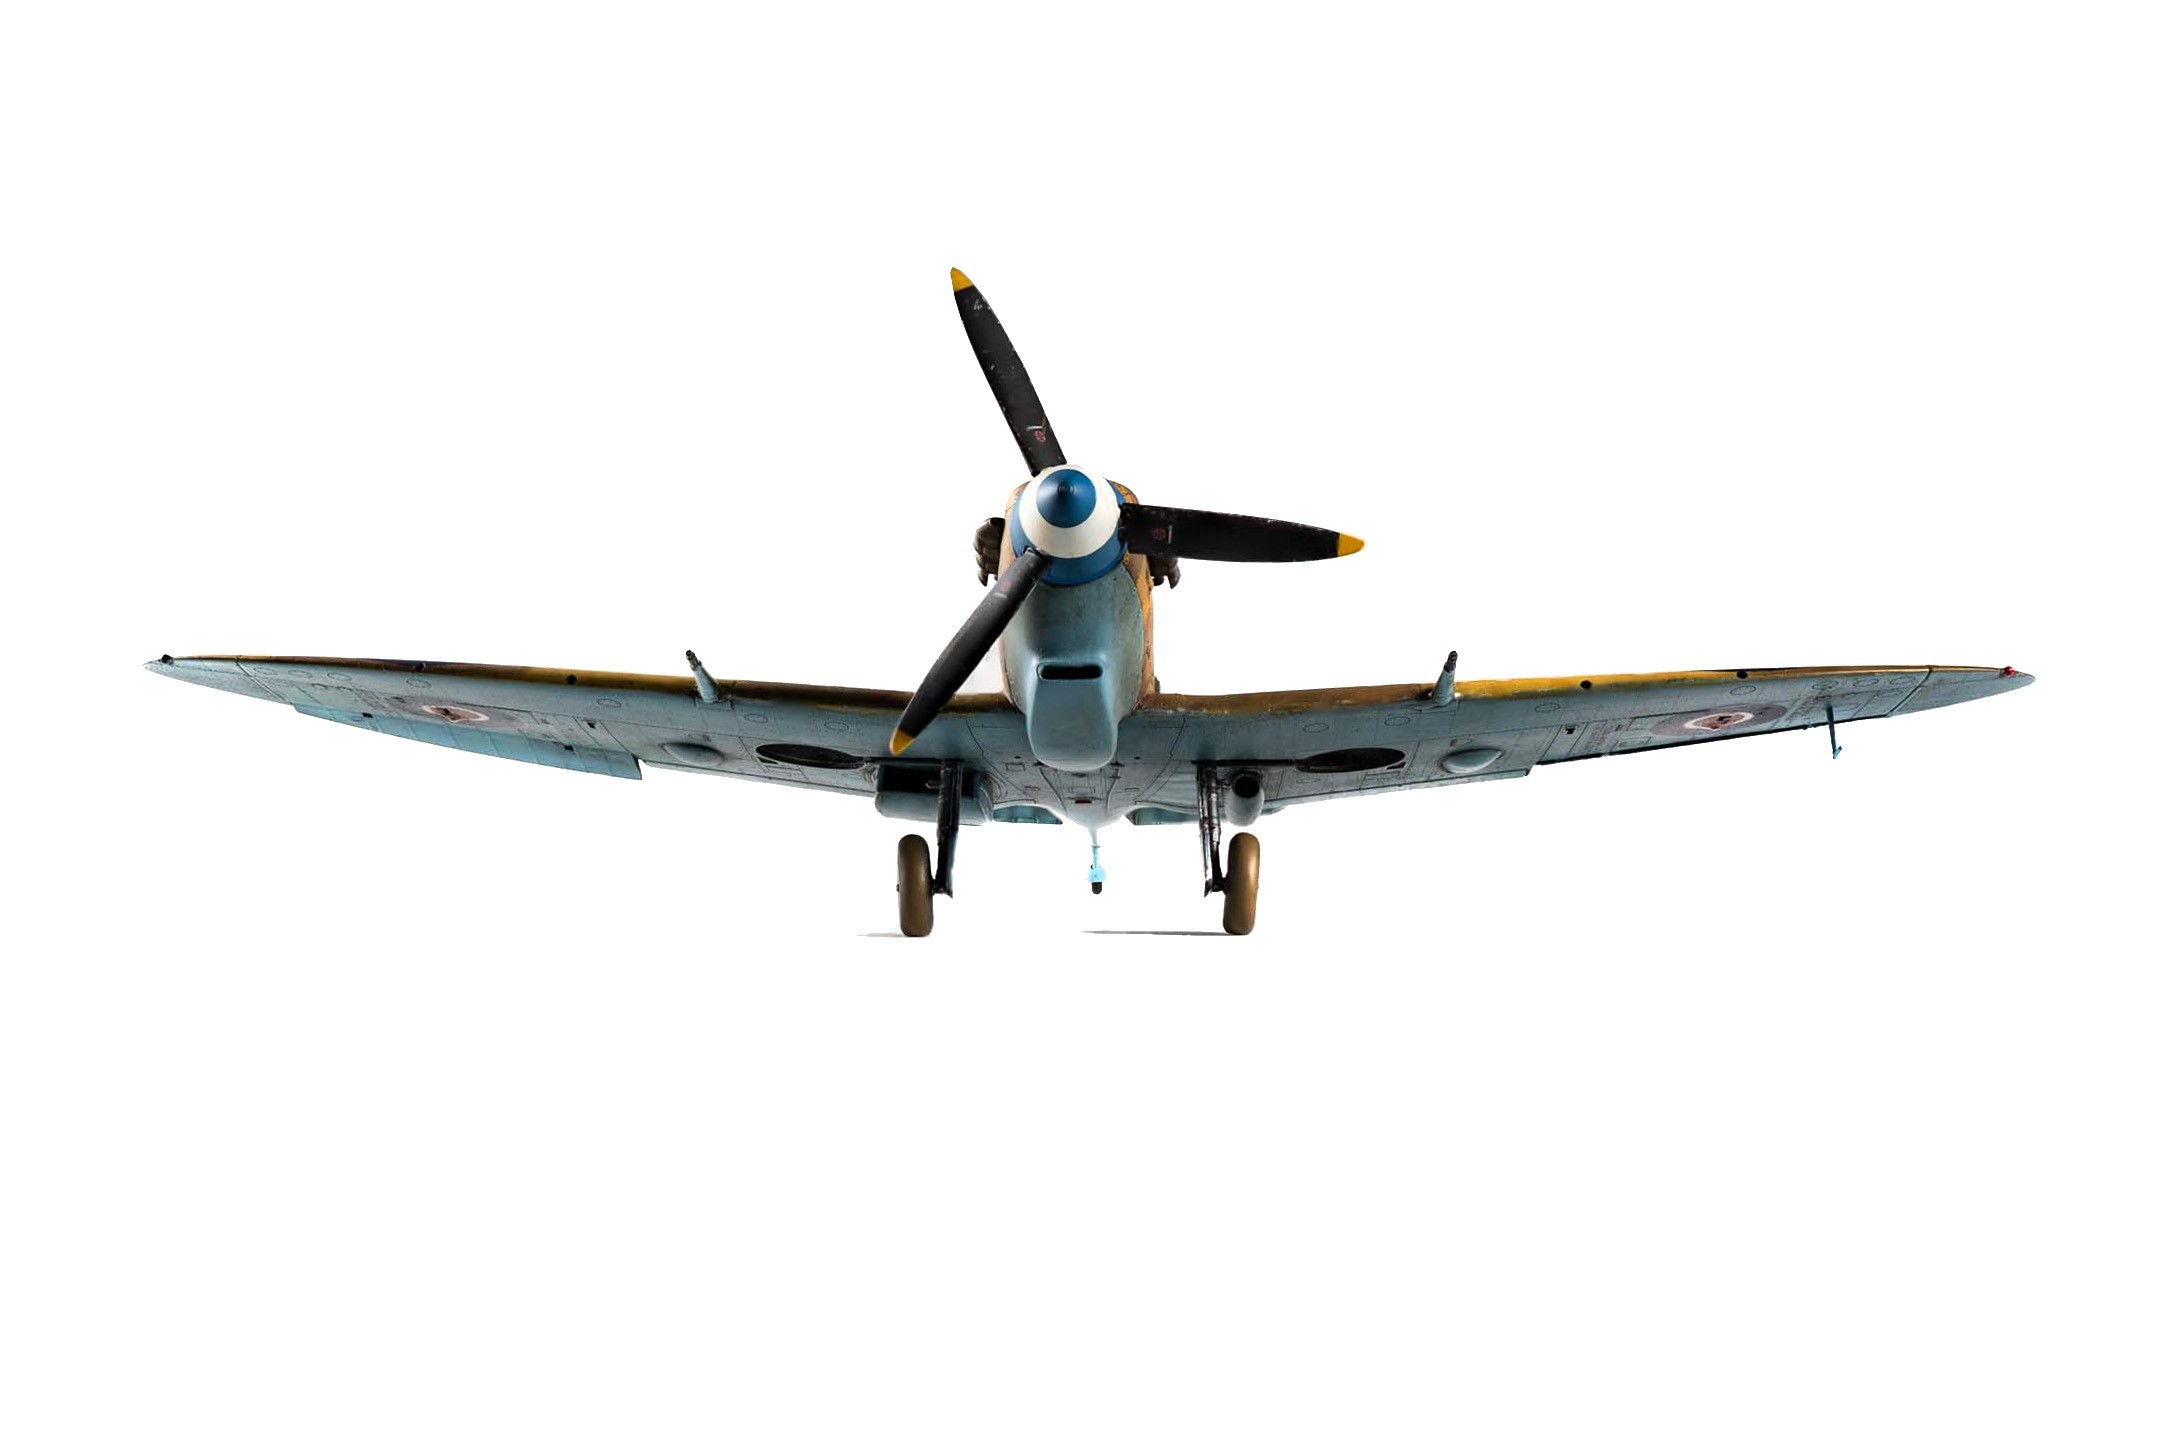 Spitfire Mk Vb ROYALL HELLENIC AIR FORCE ER 758 HERO 336 Sqn 